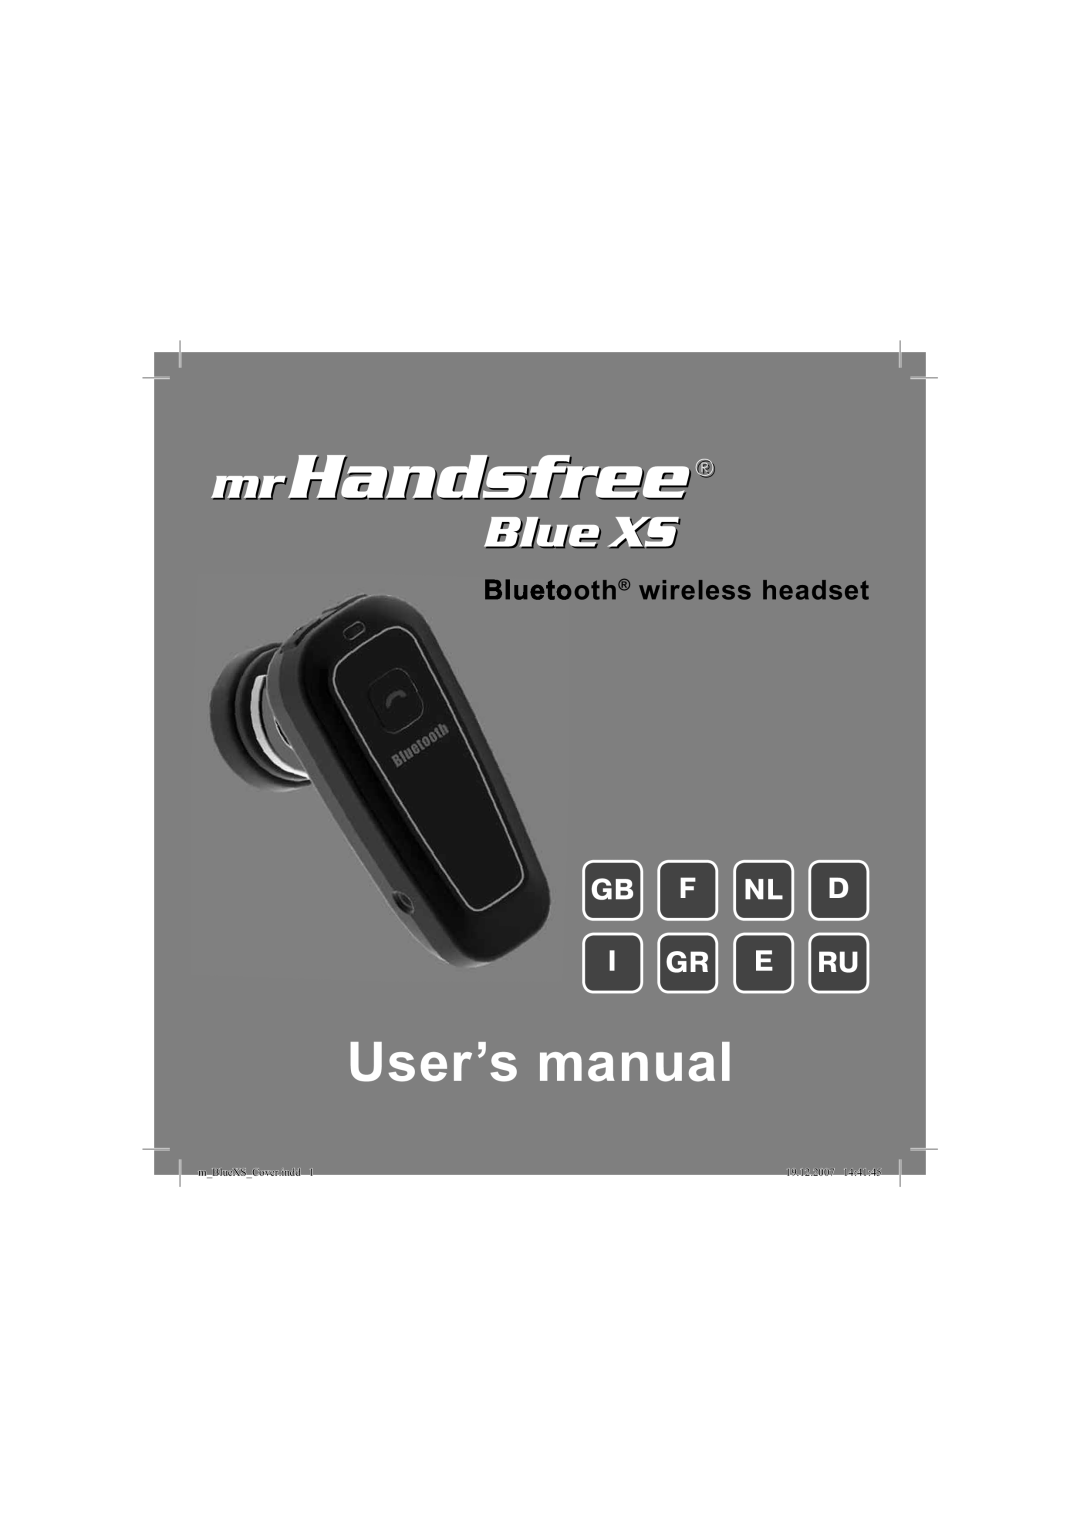 Mr Handsfree blue XS user manual Gb F Nl D I Gr E Ru, Bluetooth wireless headset, m BlueXS Cover.indd, 19.12.2007 